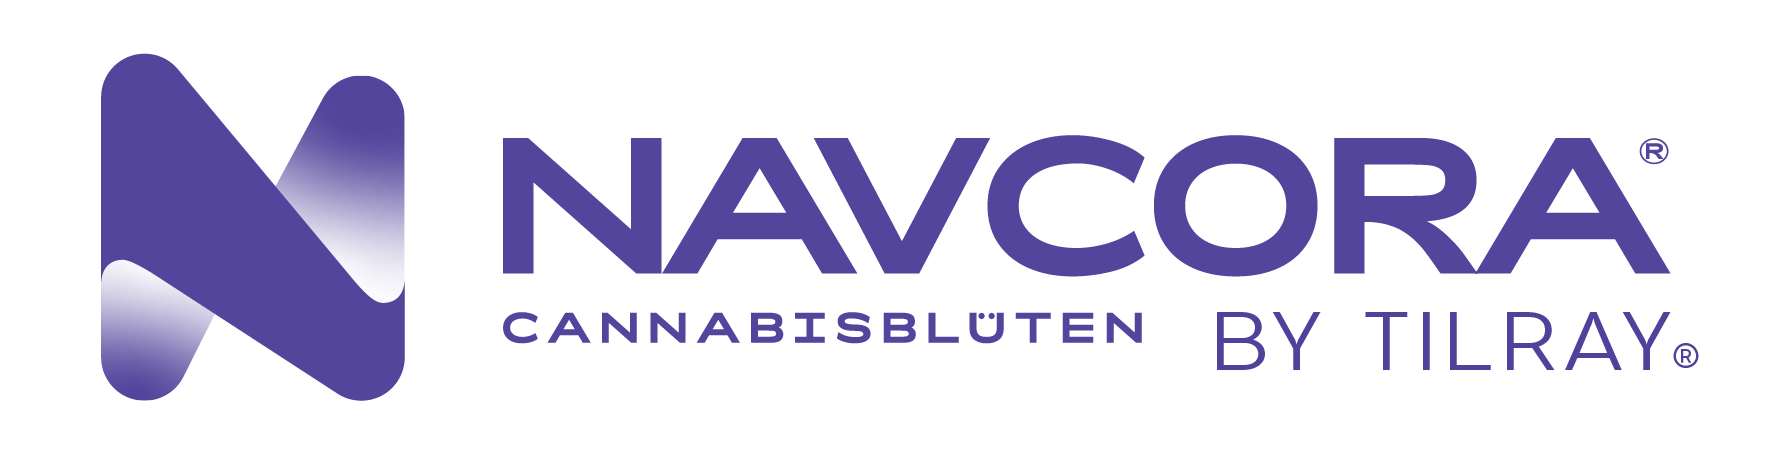 Navcora Logo in der Apotheke LUX 99 aka die Cannabisapotheke